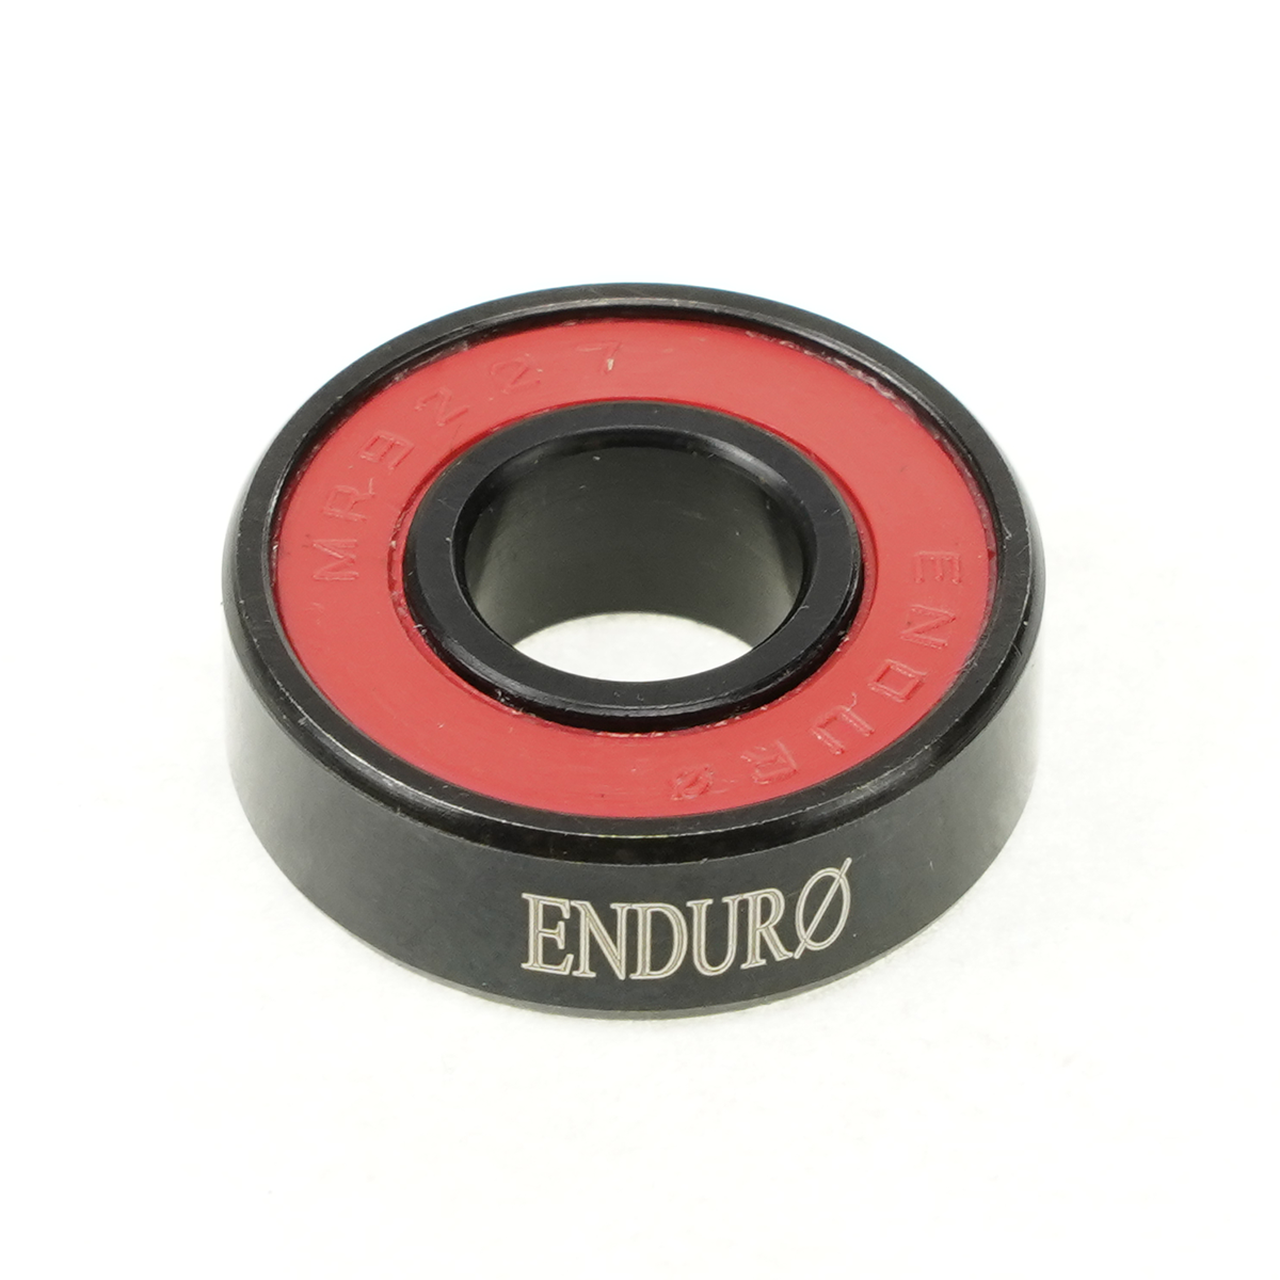 Enduro CO MR 9227 VV- Enduro Zero, Black-Oxide, Ceramic Hybrid, ABEC-5, Radial Bearing (C3 Clearance) - 9mm x 22mm x 7mm